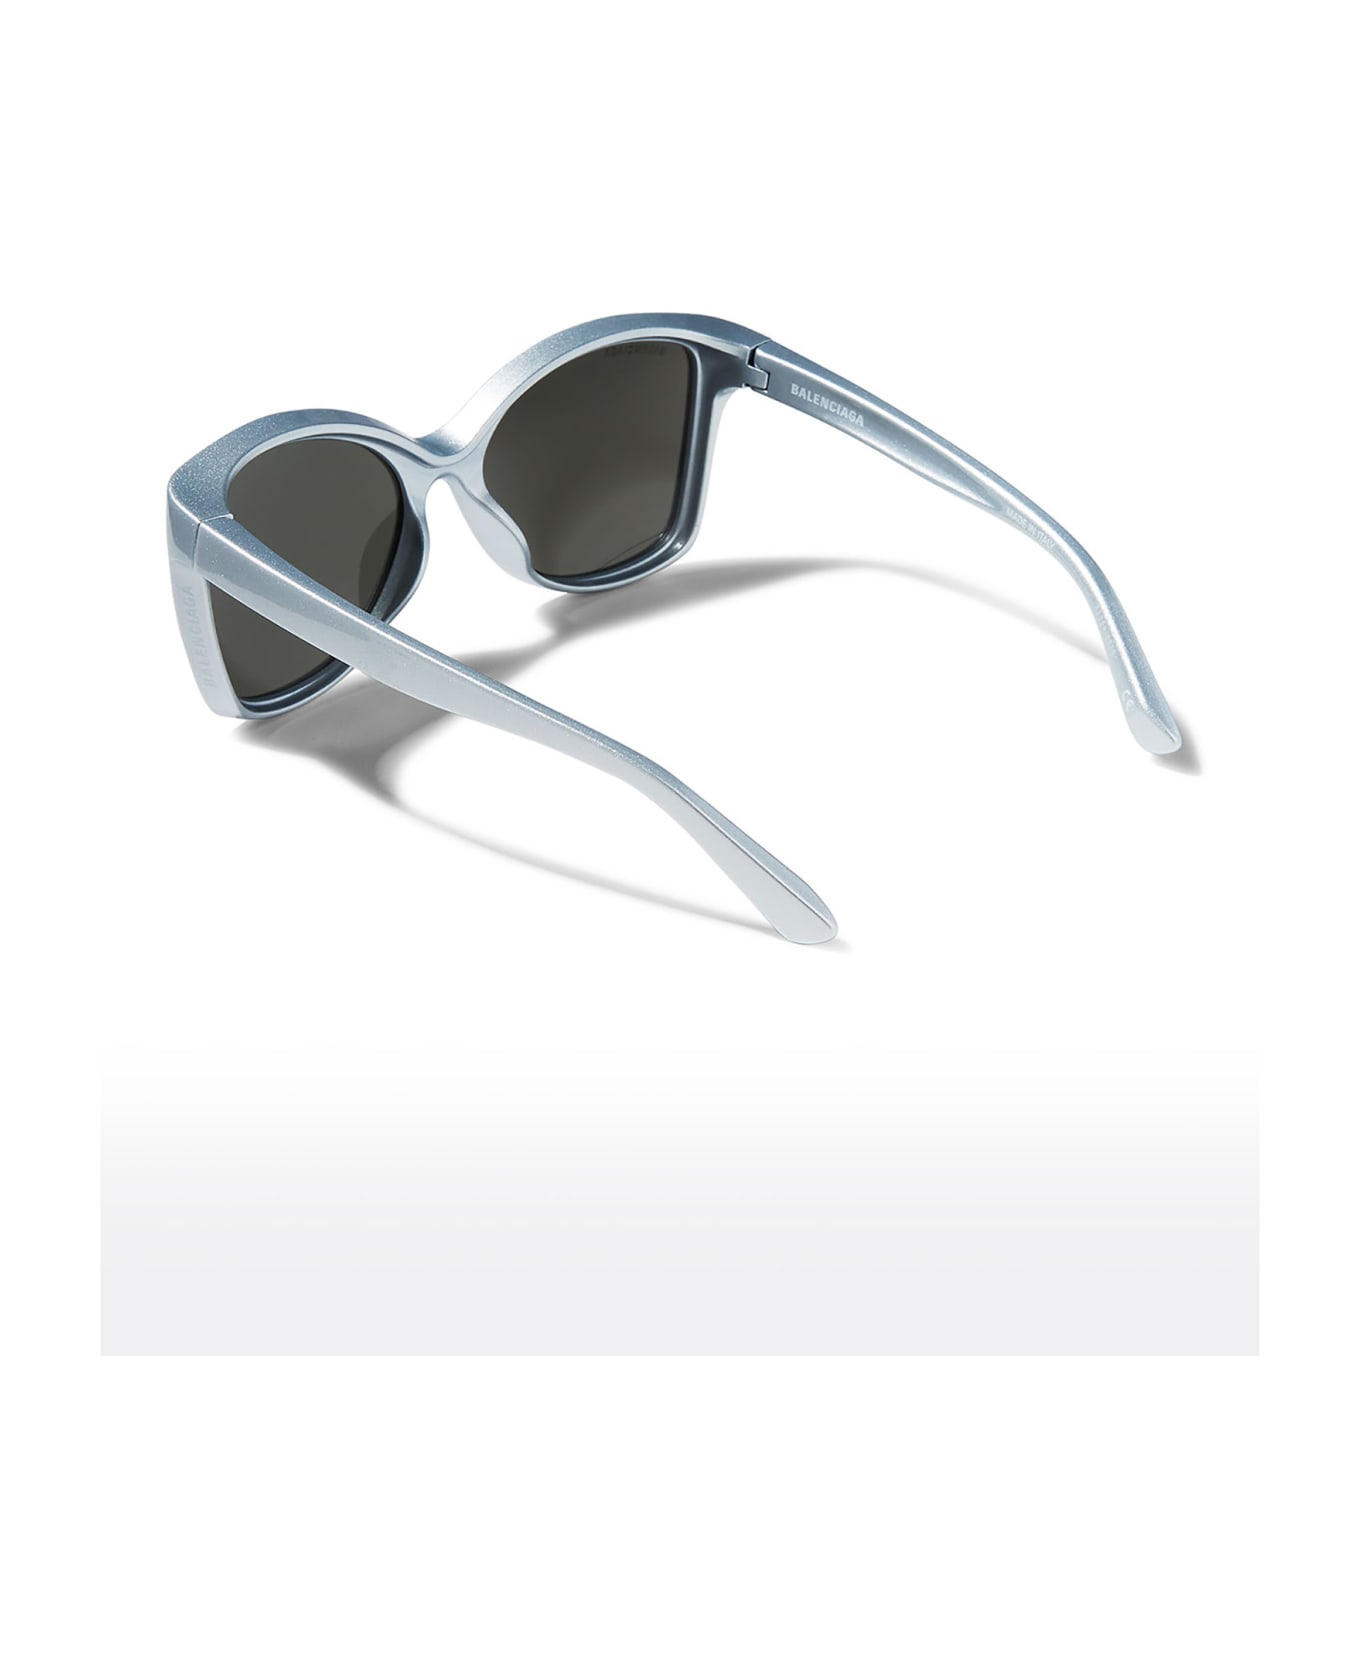 Balenciaga Eyewear 18no43l0a - AJ Morgan large sunglasses in black and white stripe